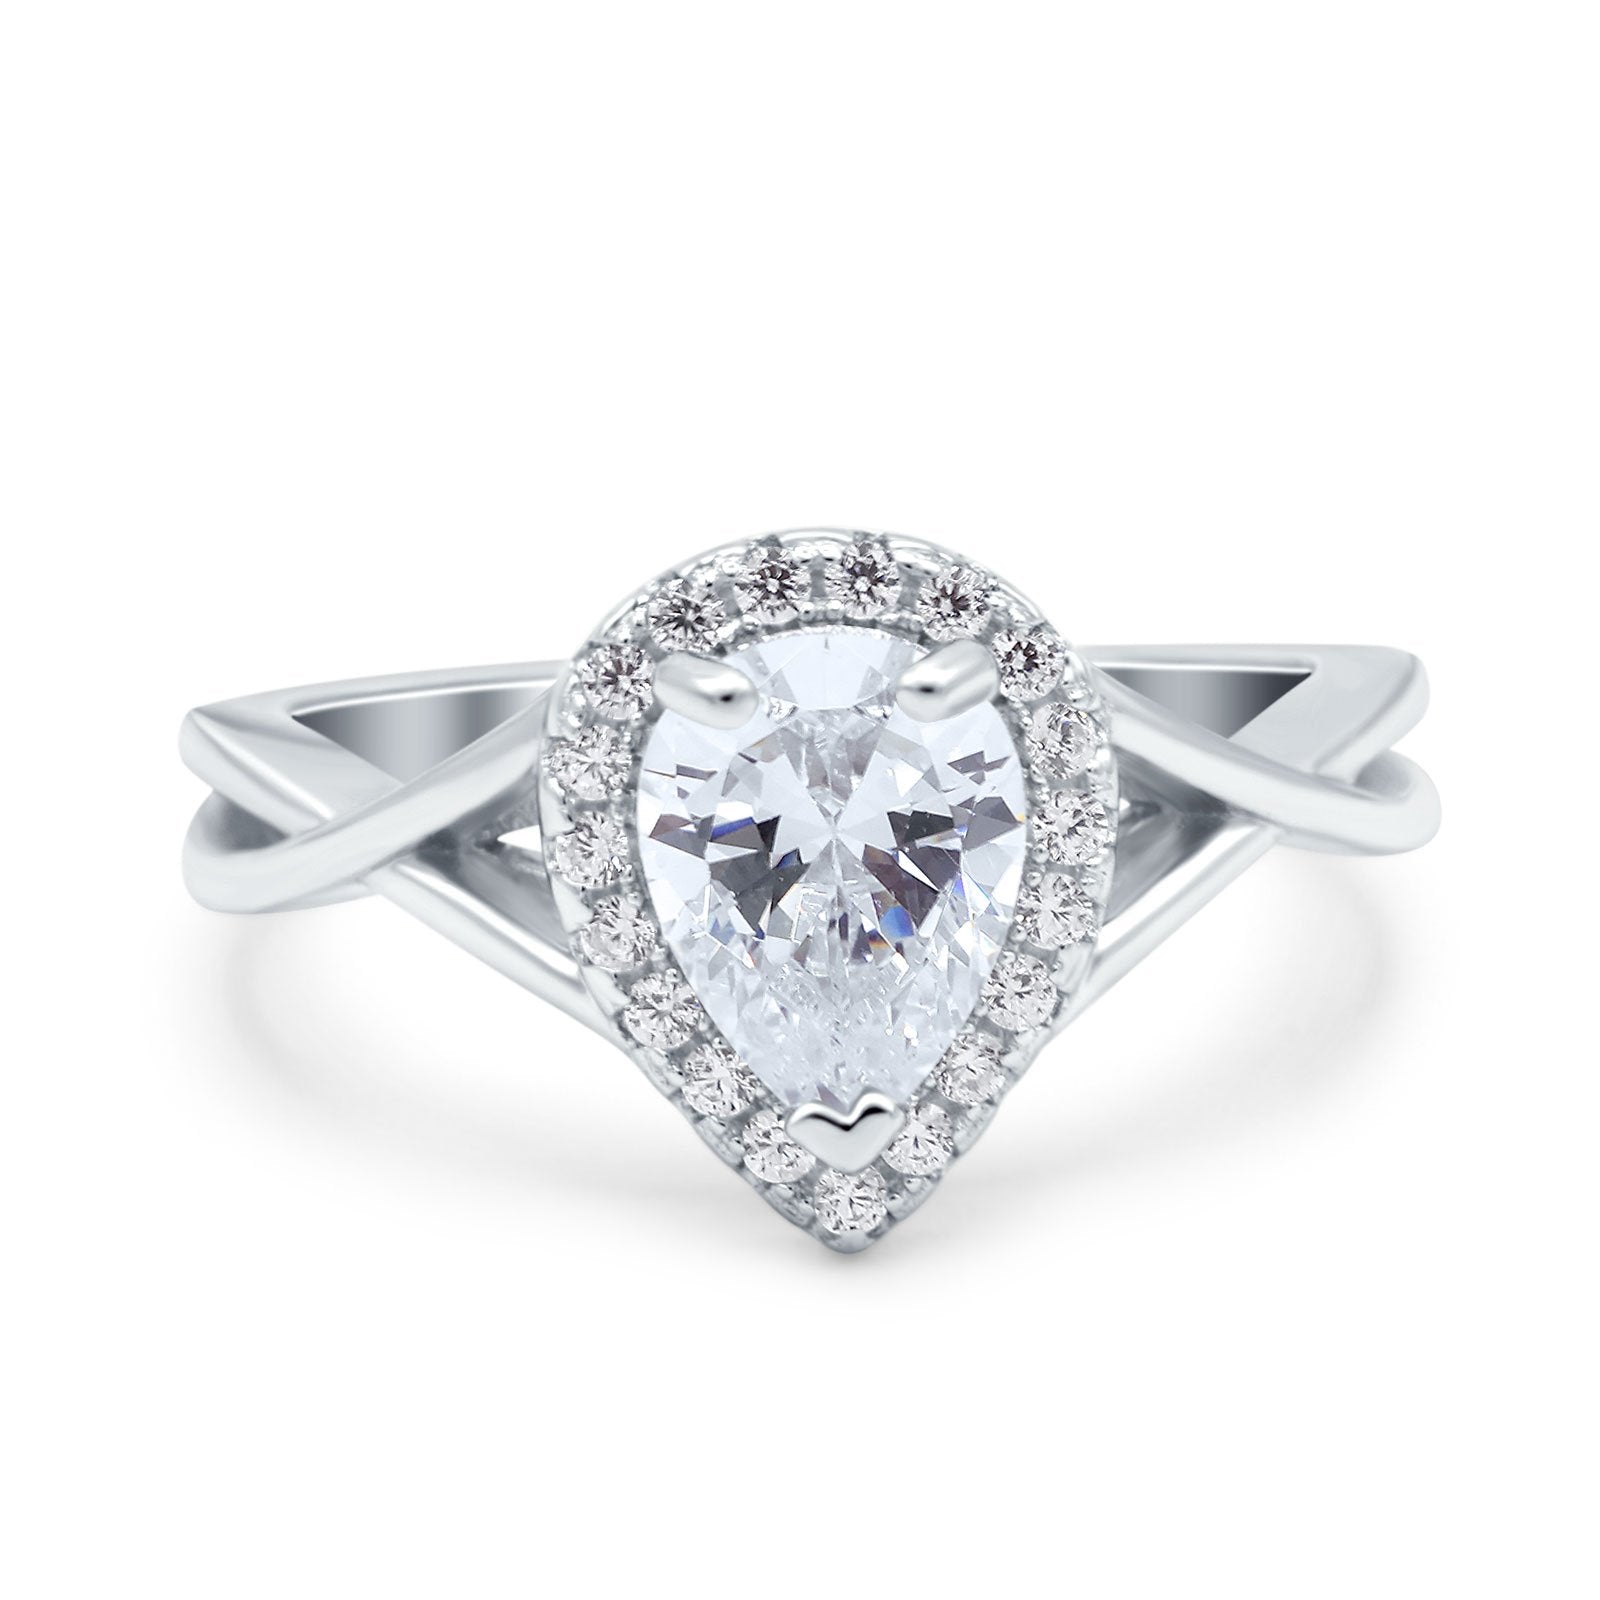 14K Gold Teardrop Pear Halo Twist Infinity Shank Simulated Cubic Zirconia Engagement Wedding Bridal Ring